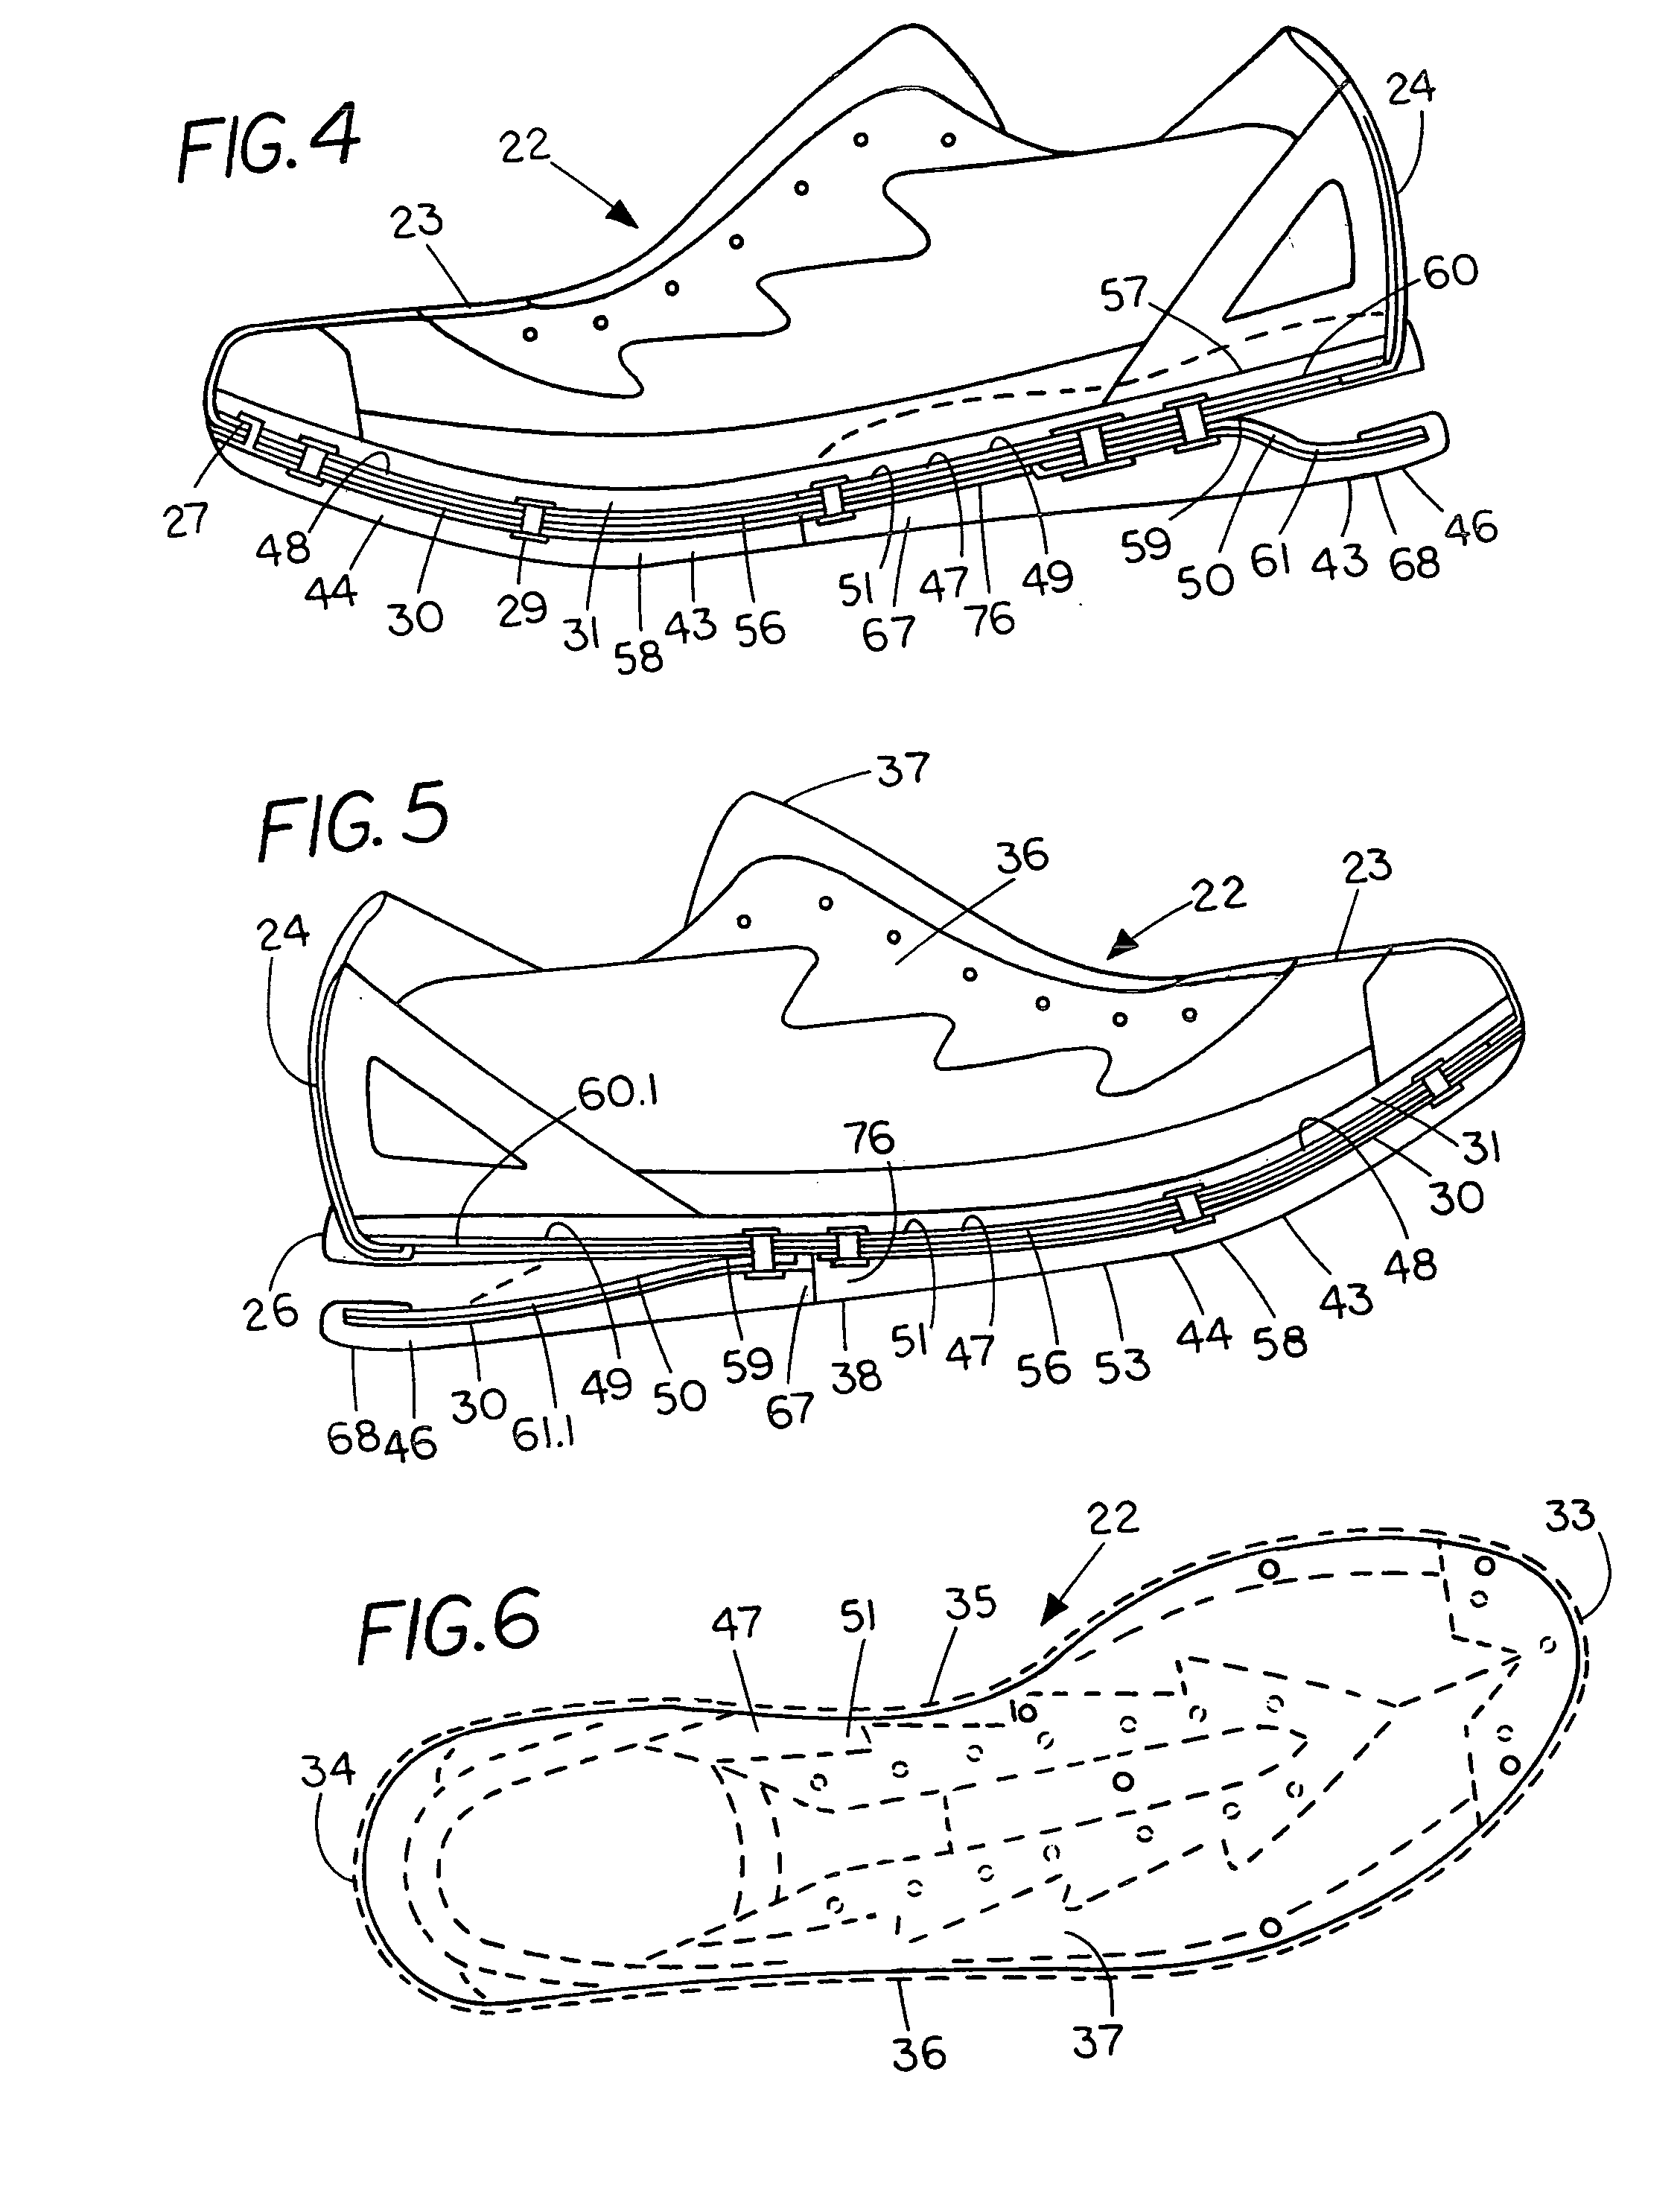 Custom article of footwear and method of making the same